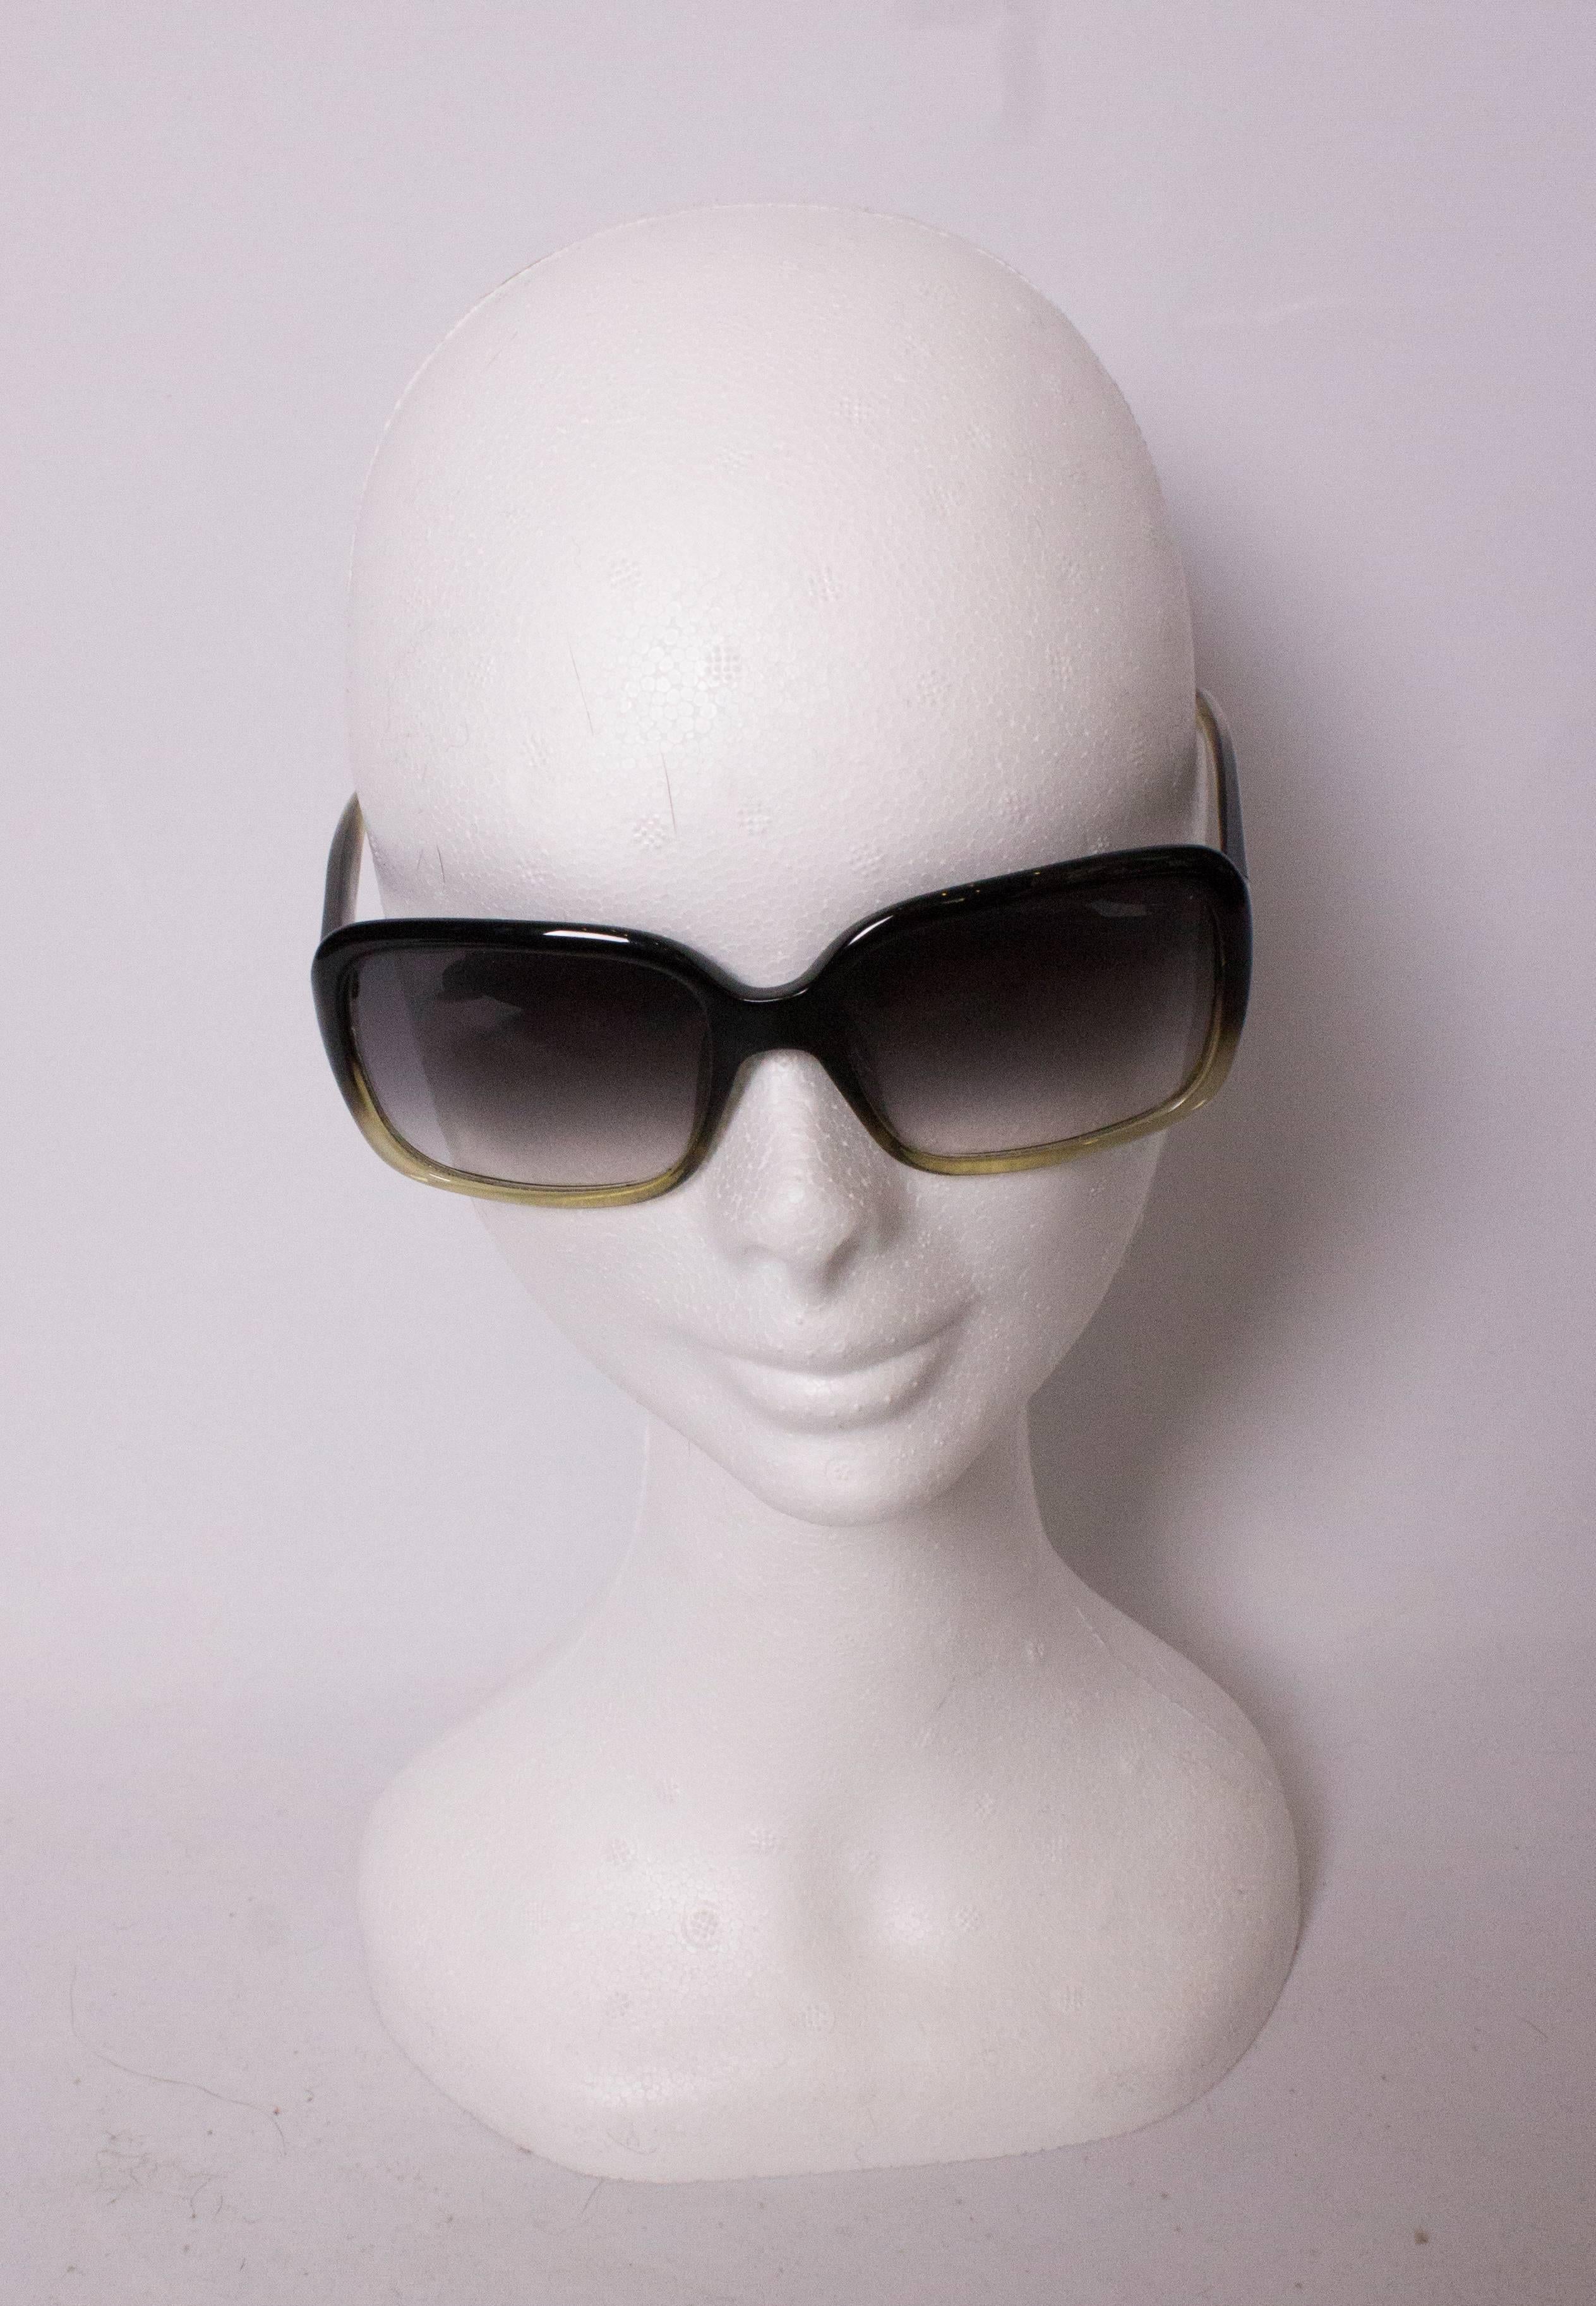 A chic pair of sunglasses by Giorgio Armani.